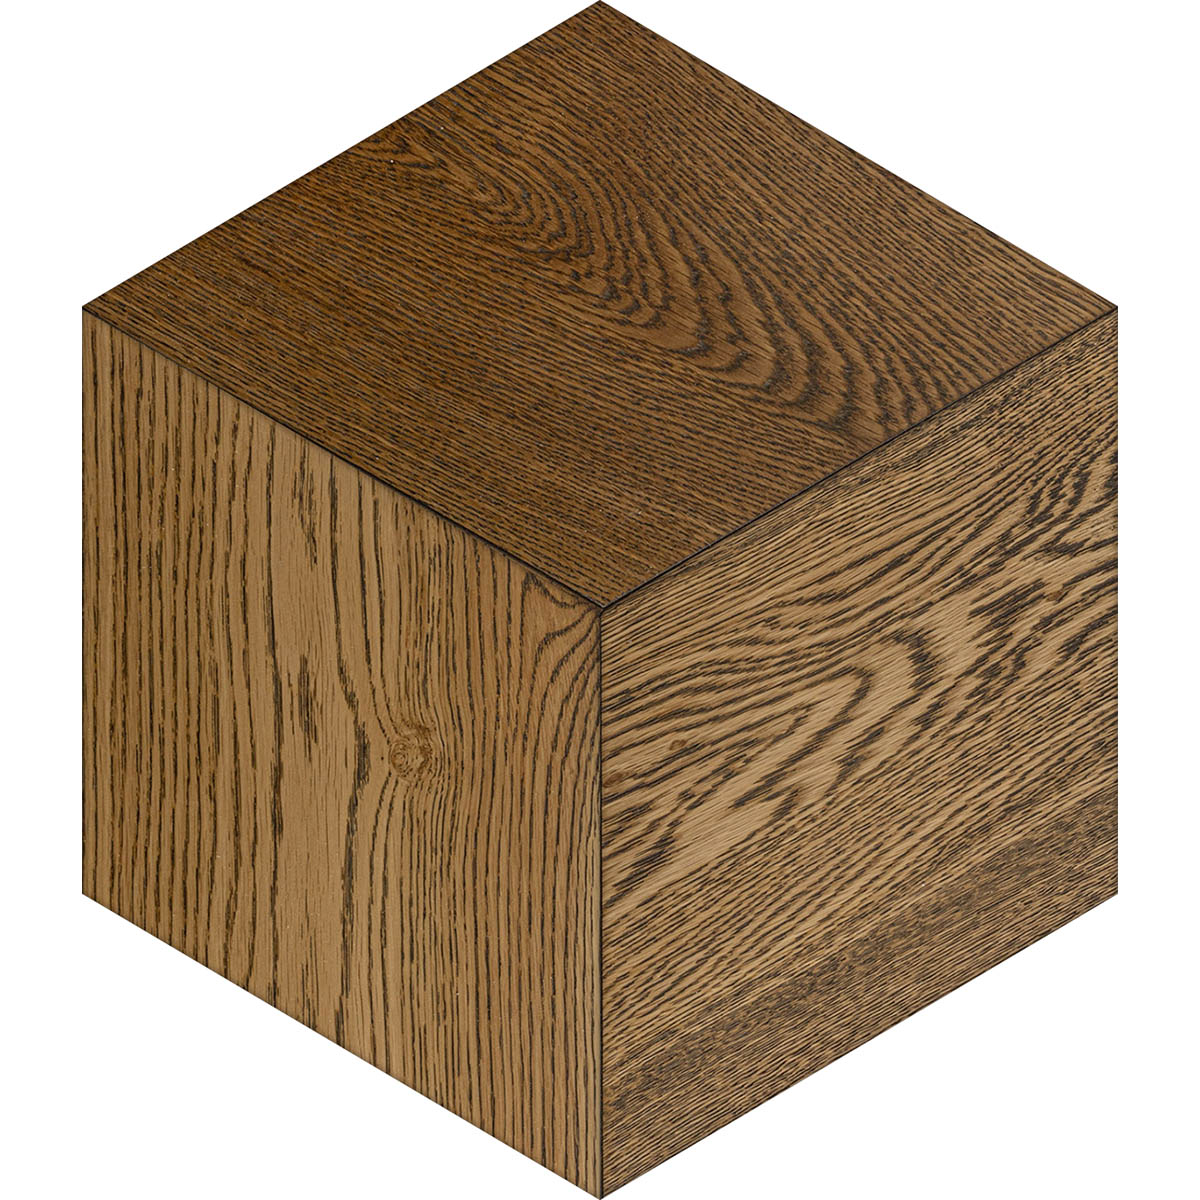 Hanson Vale - Geometric diamond wood floor from JackEvie